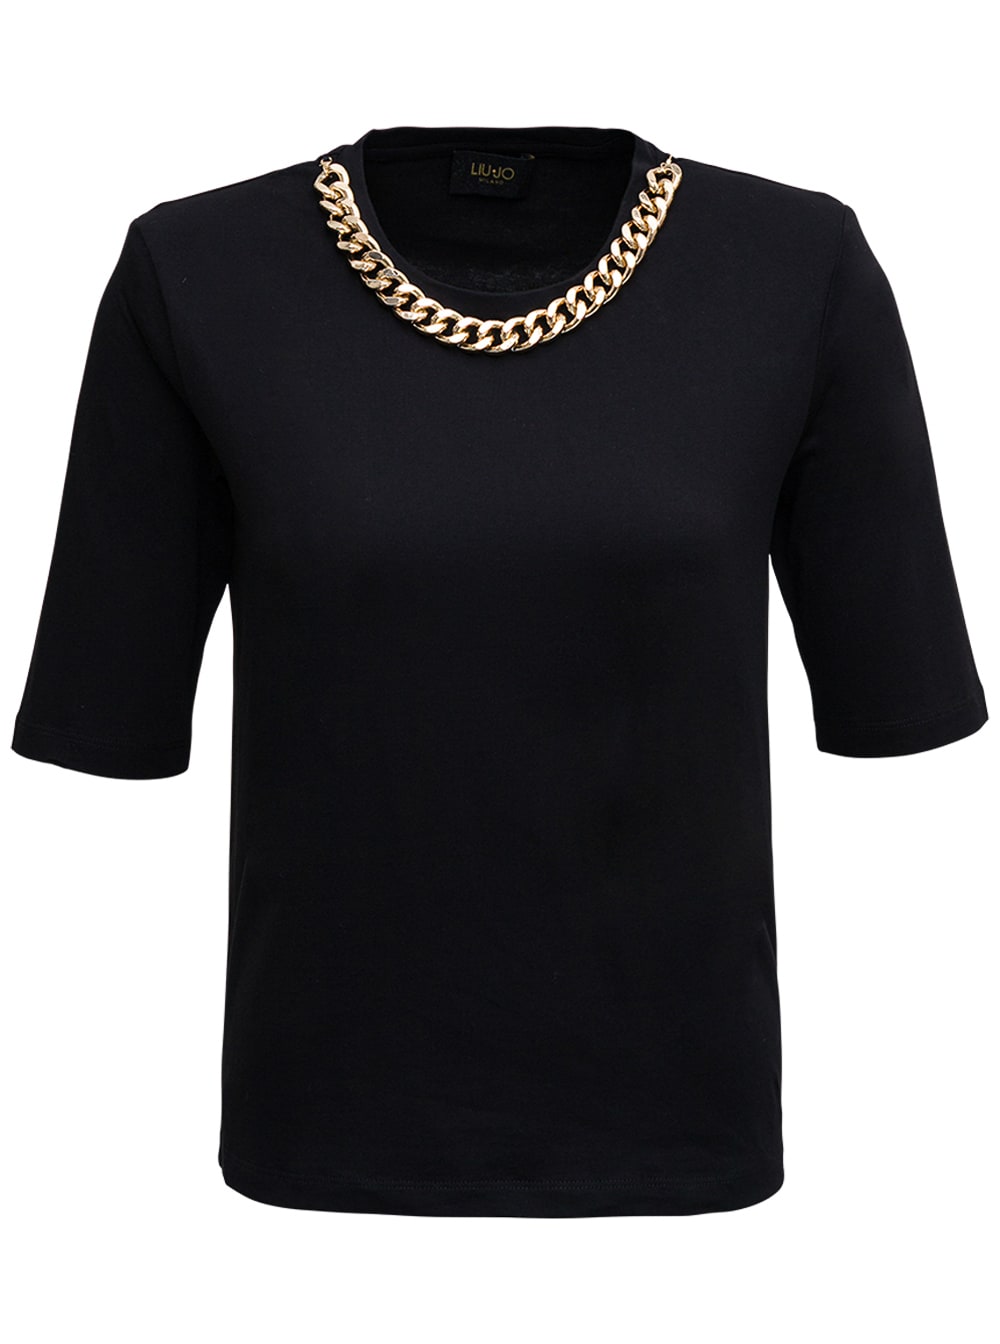 Liu-Jo Black Cotton T-shirt With Chain Detail